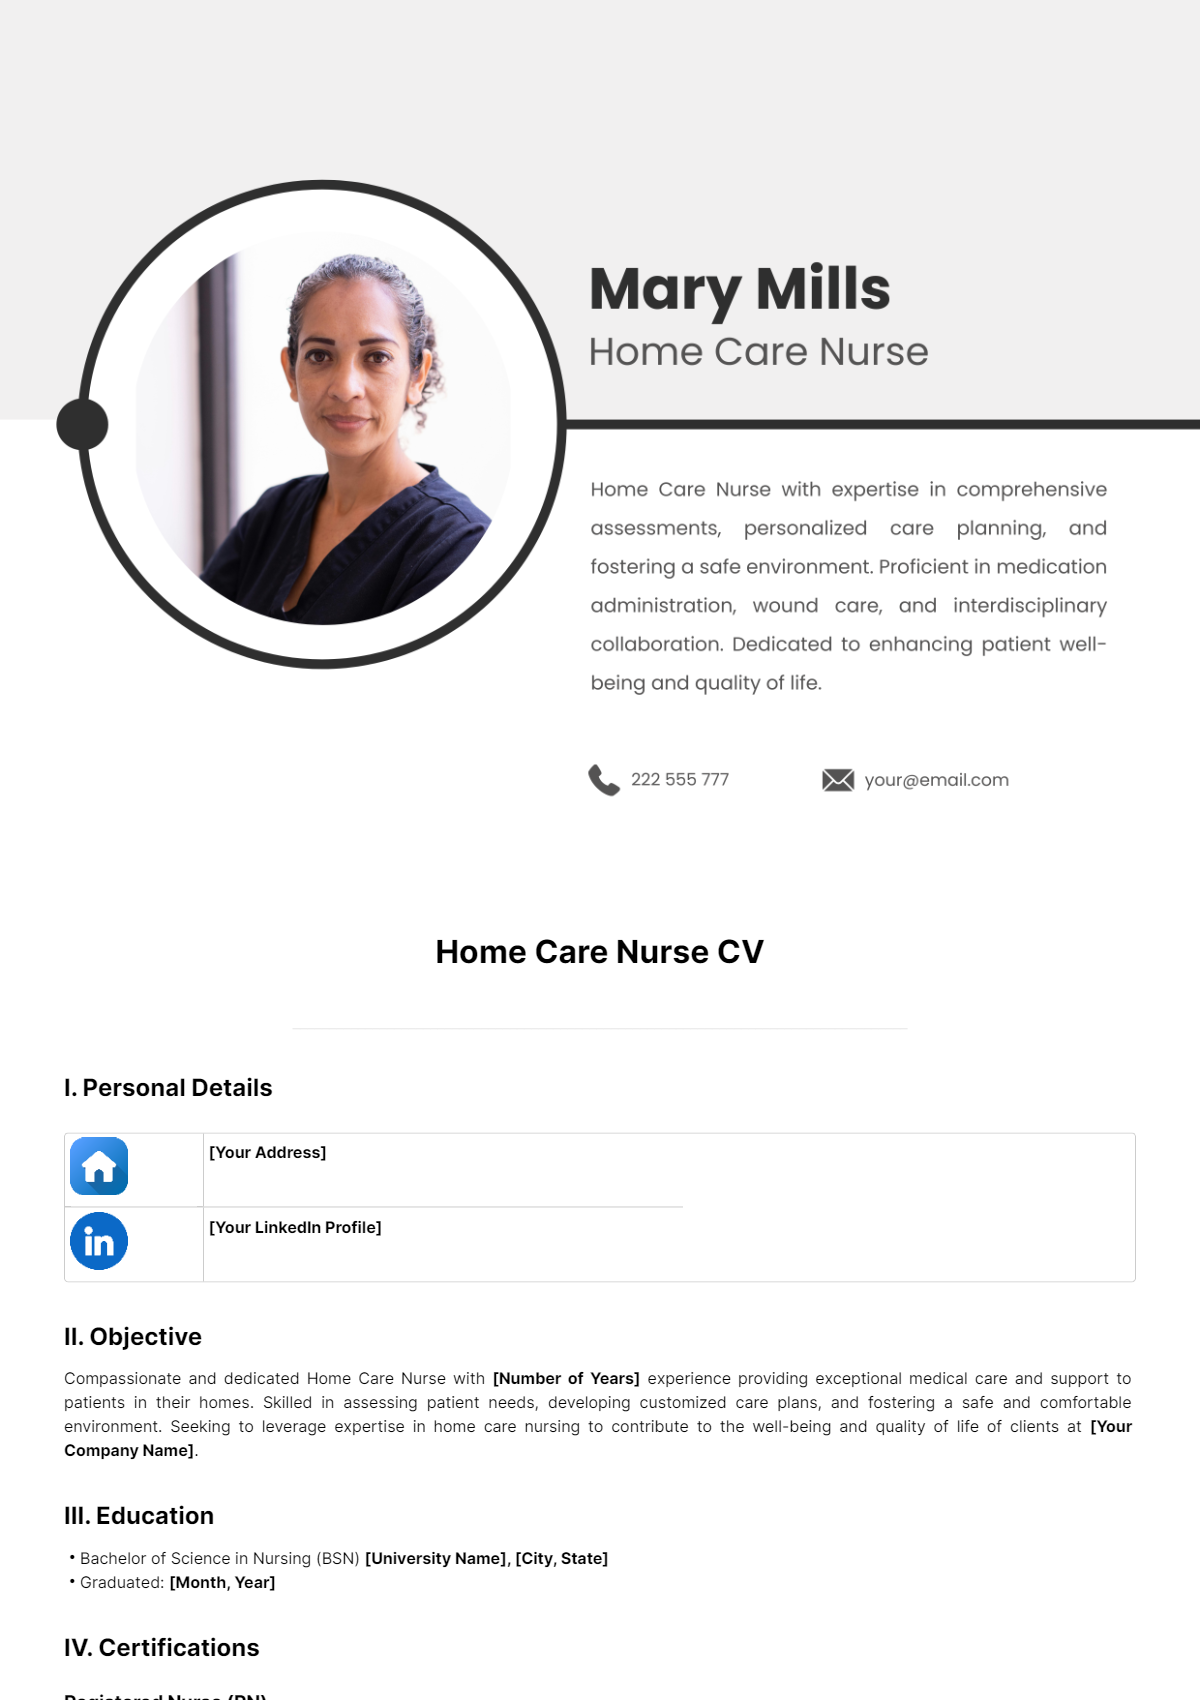 Home Care Nurse CV Template